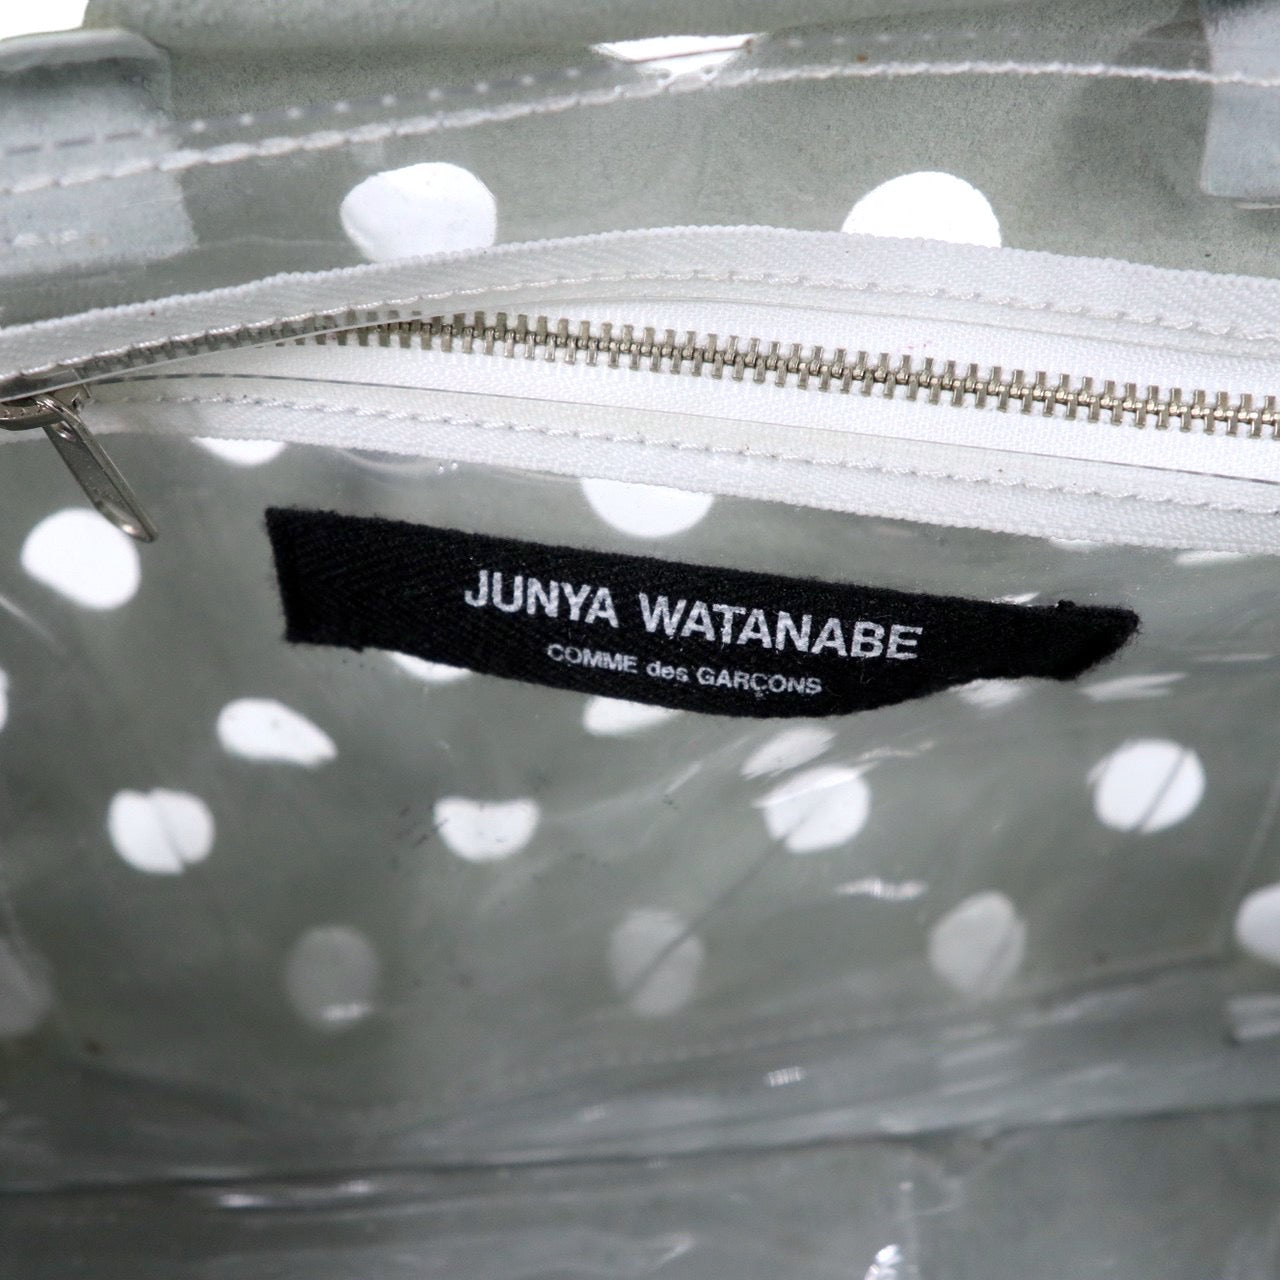 JUNYA WATANABE COMME des GARCONS エナメル がま口ハンドバッグ ホワイト パンチング レザー 日本製